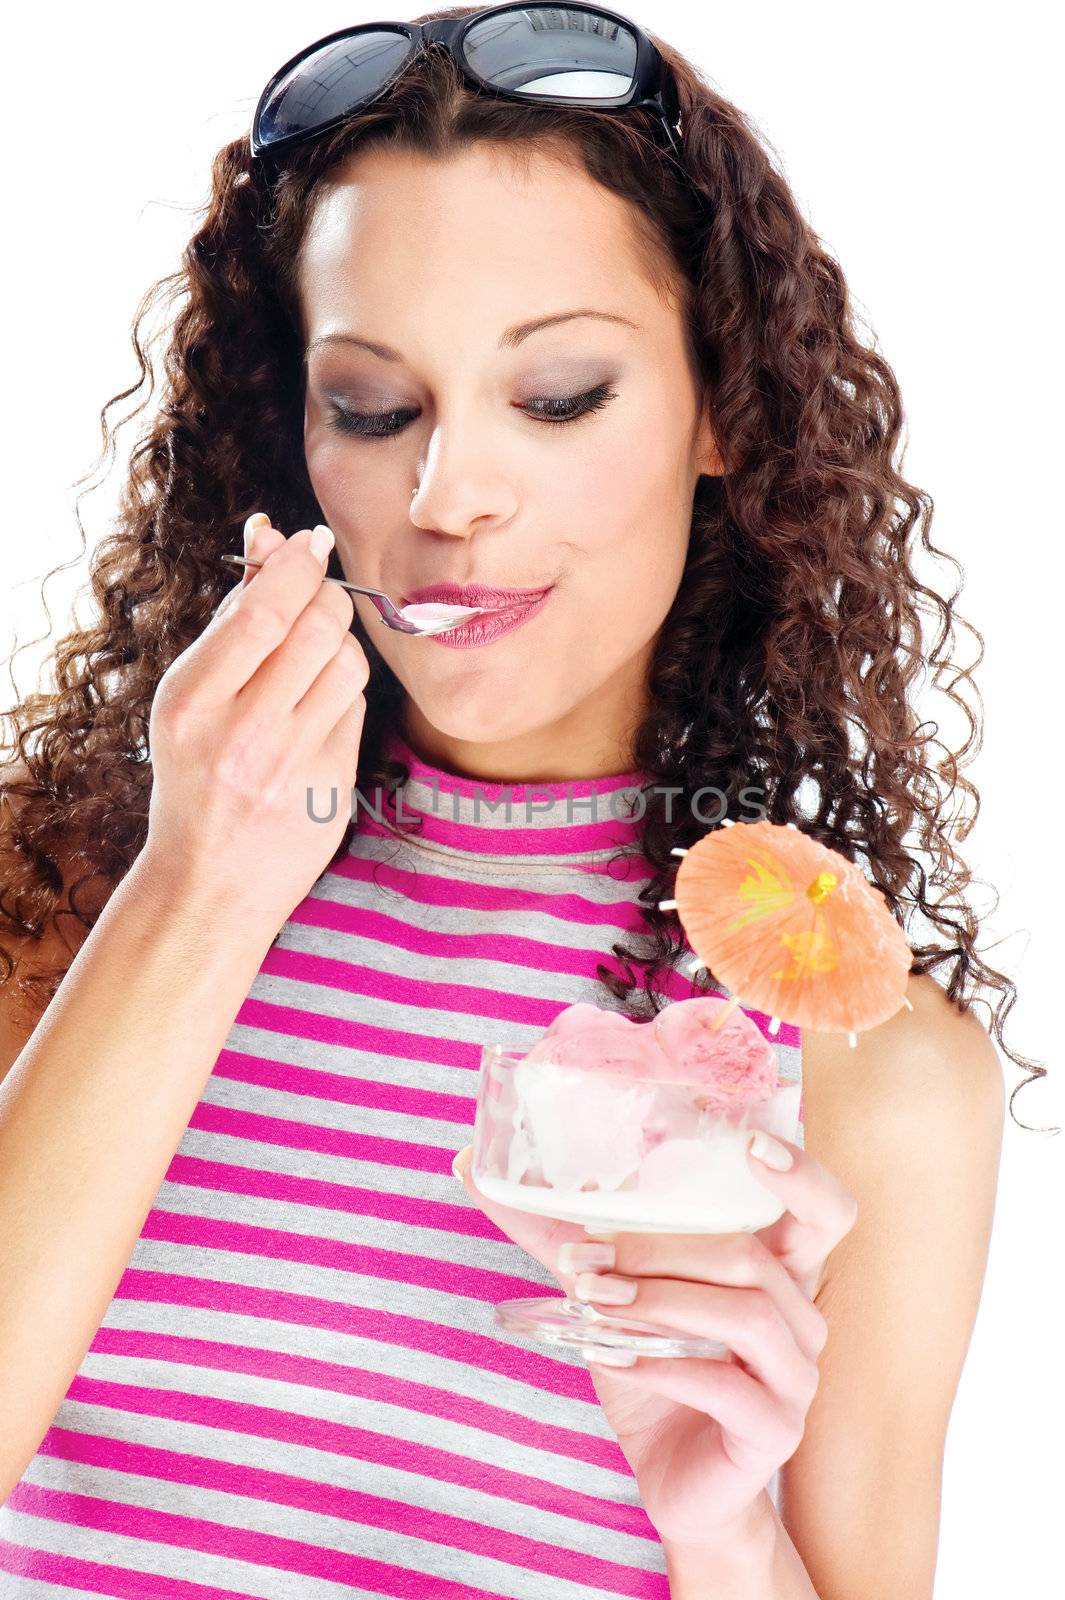 Woman eating icecream by imarin